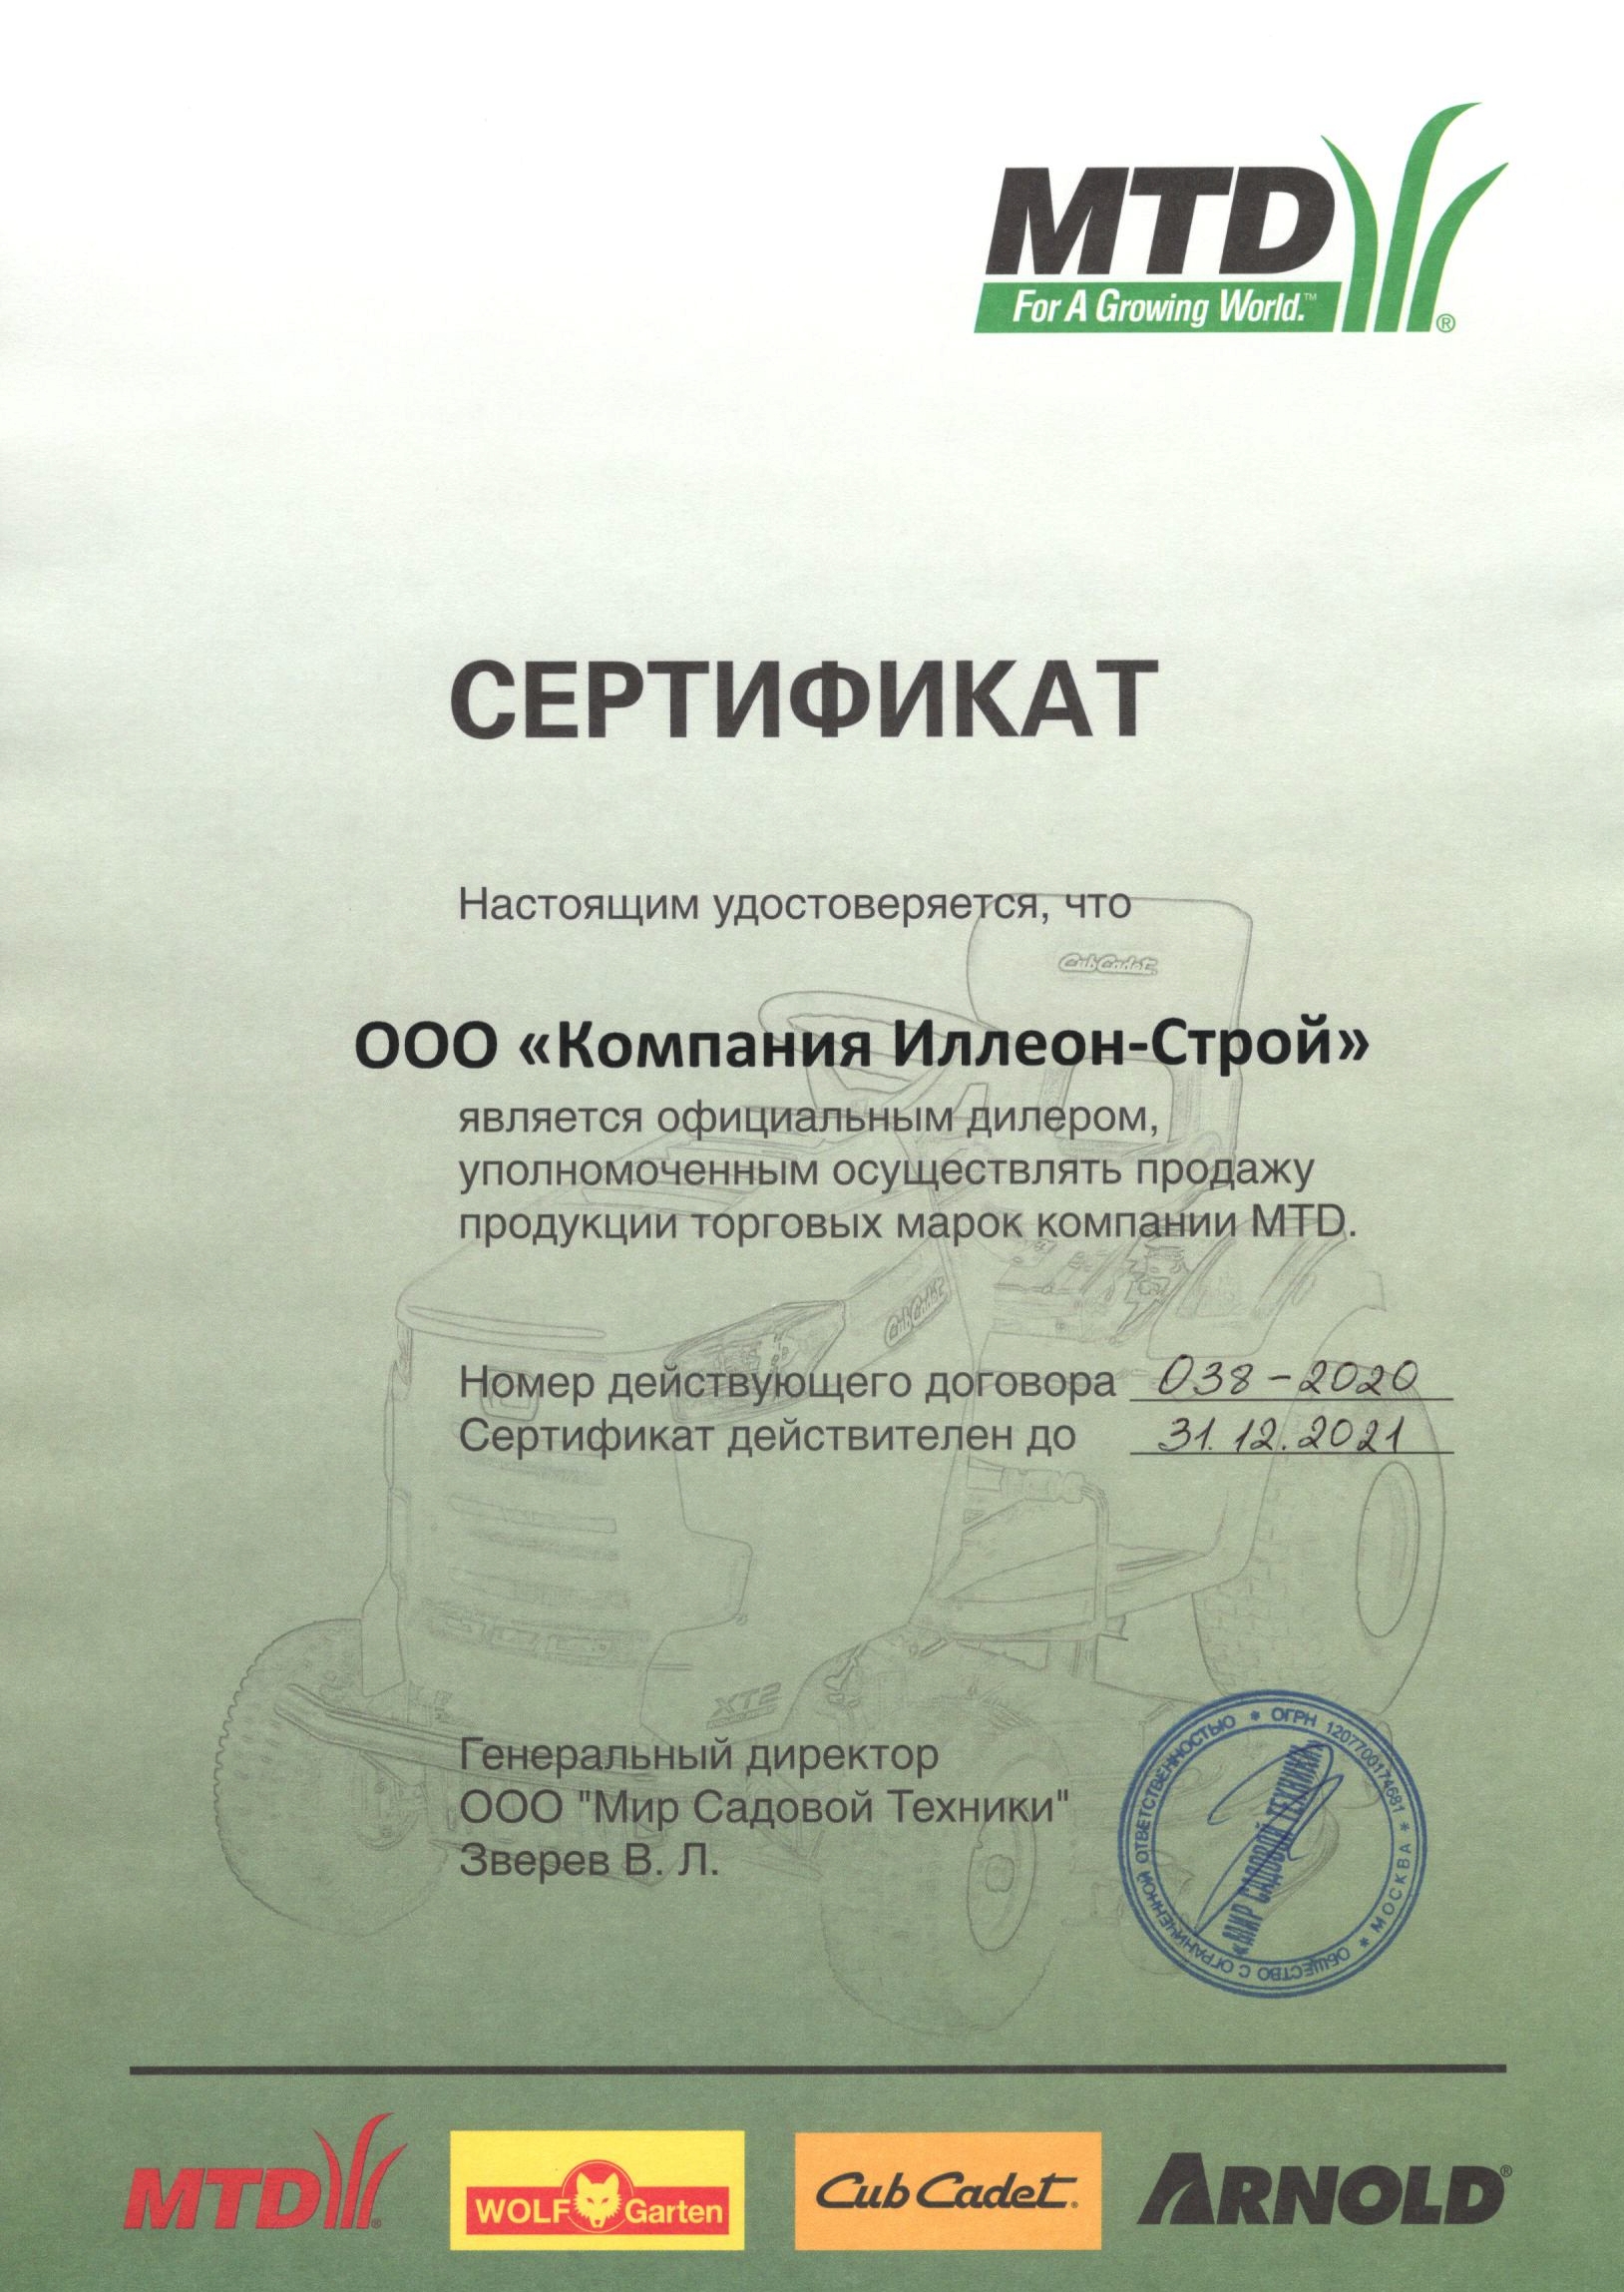 Сертификат Mtd